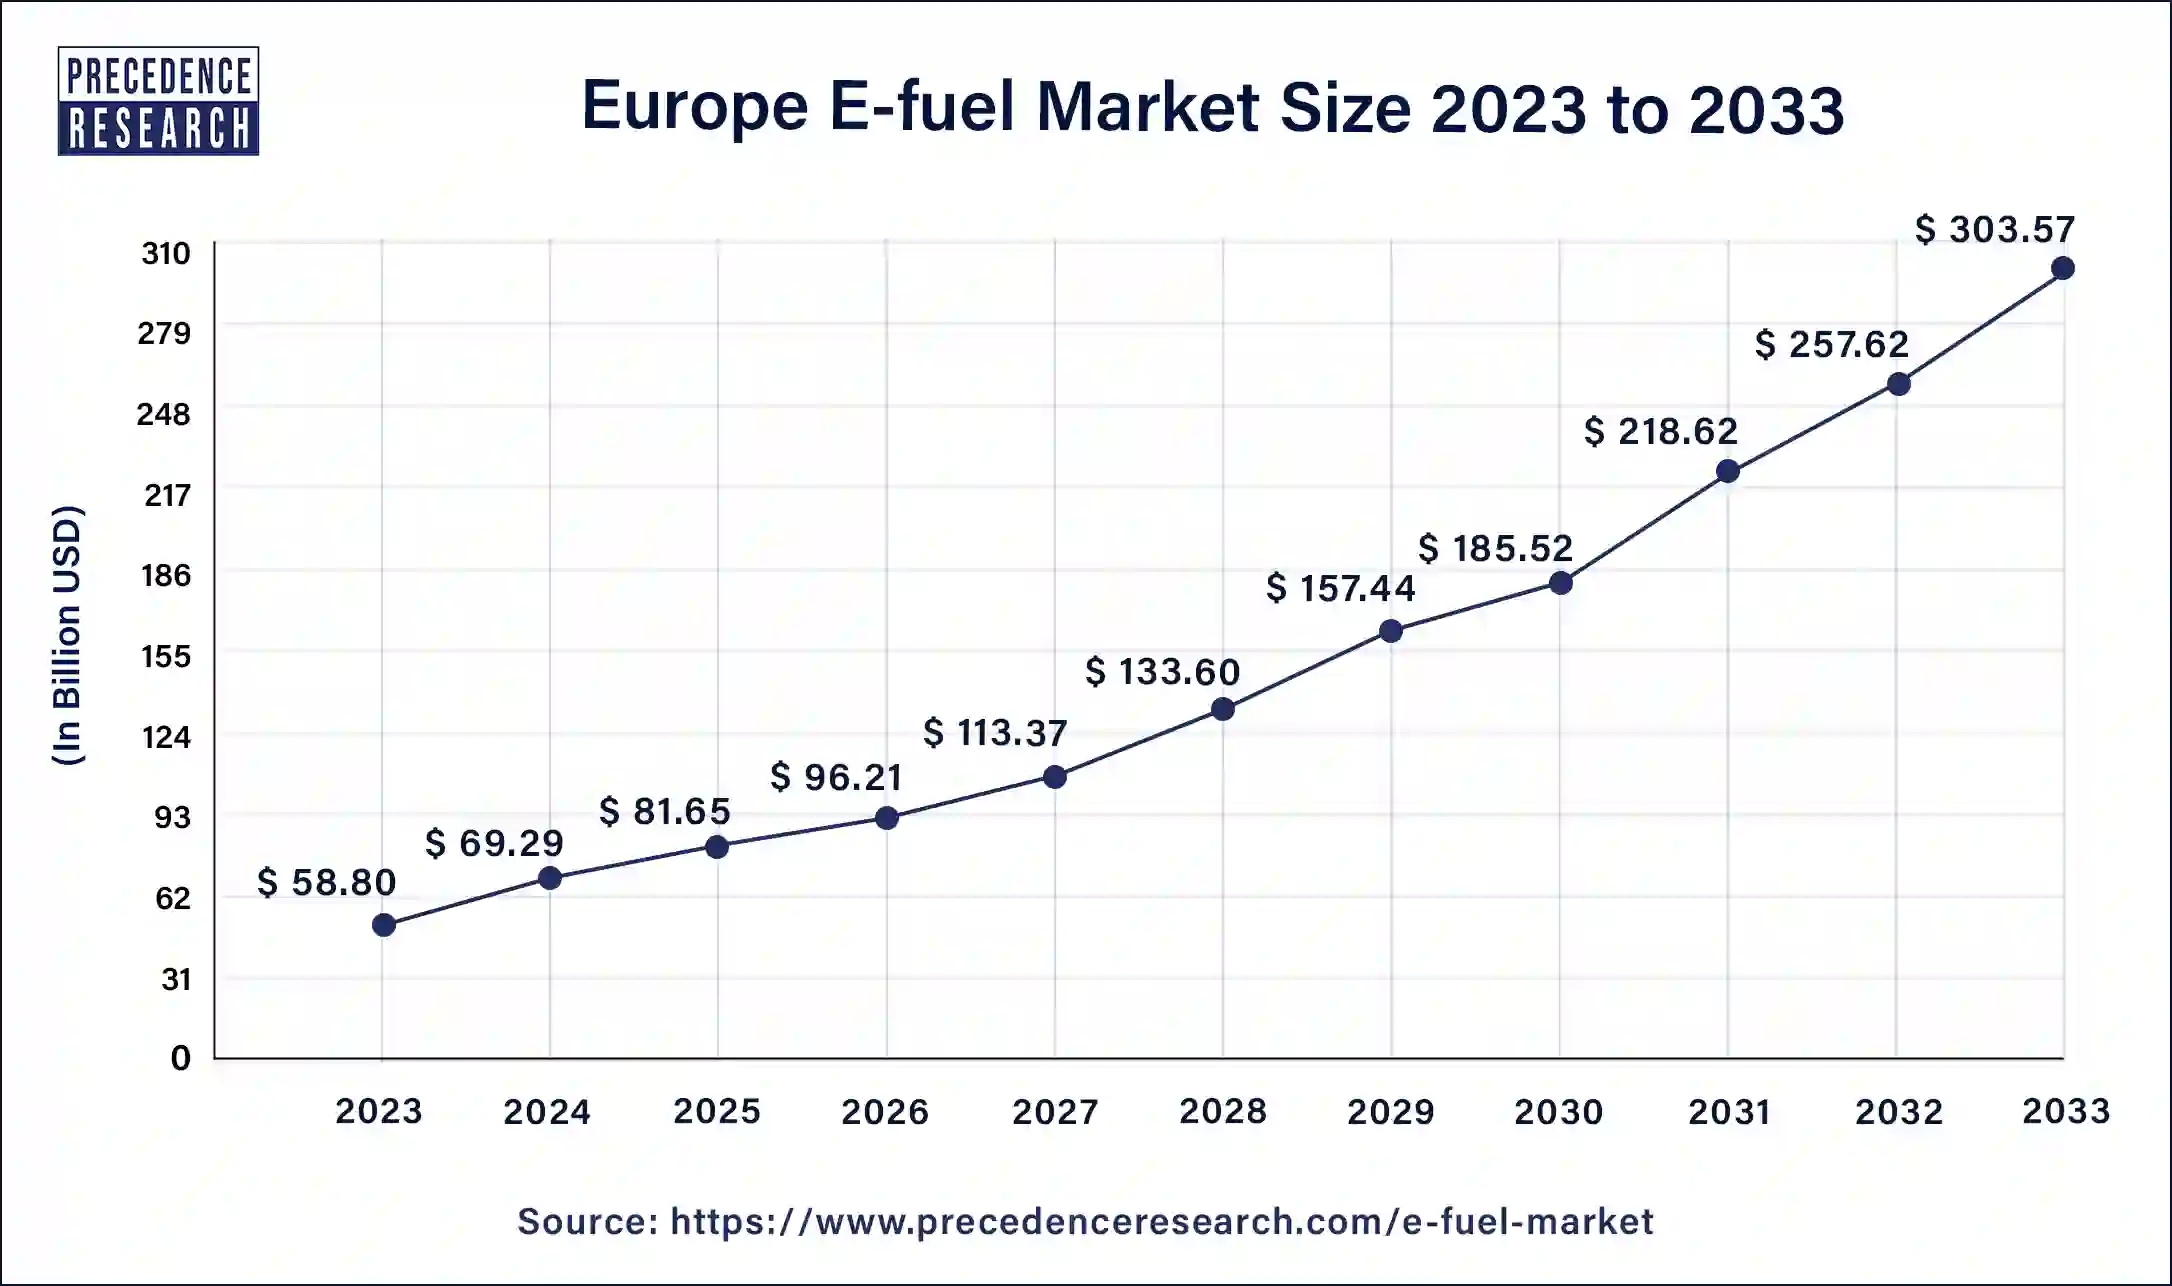 Europe E-fuel Market Size 2024 to 2033 